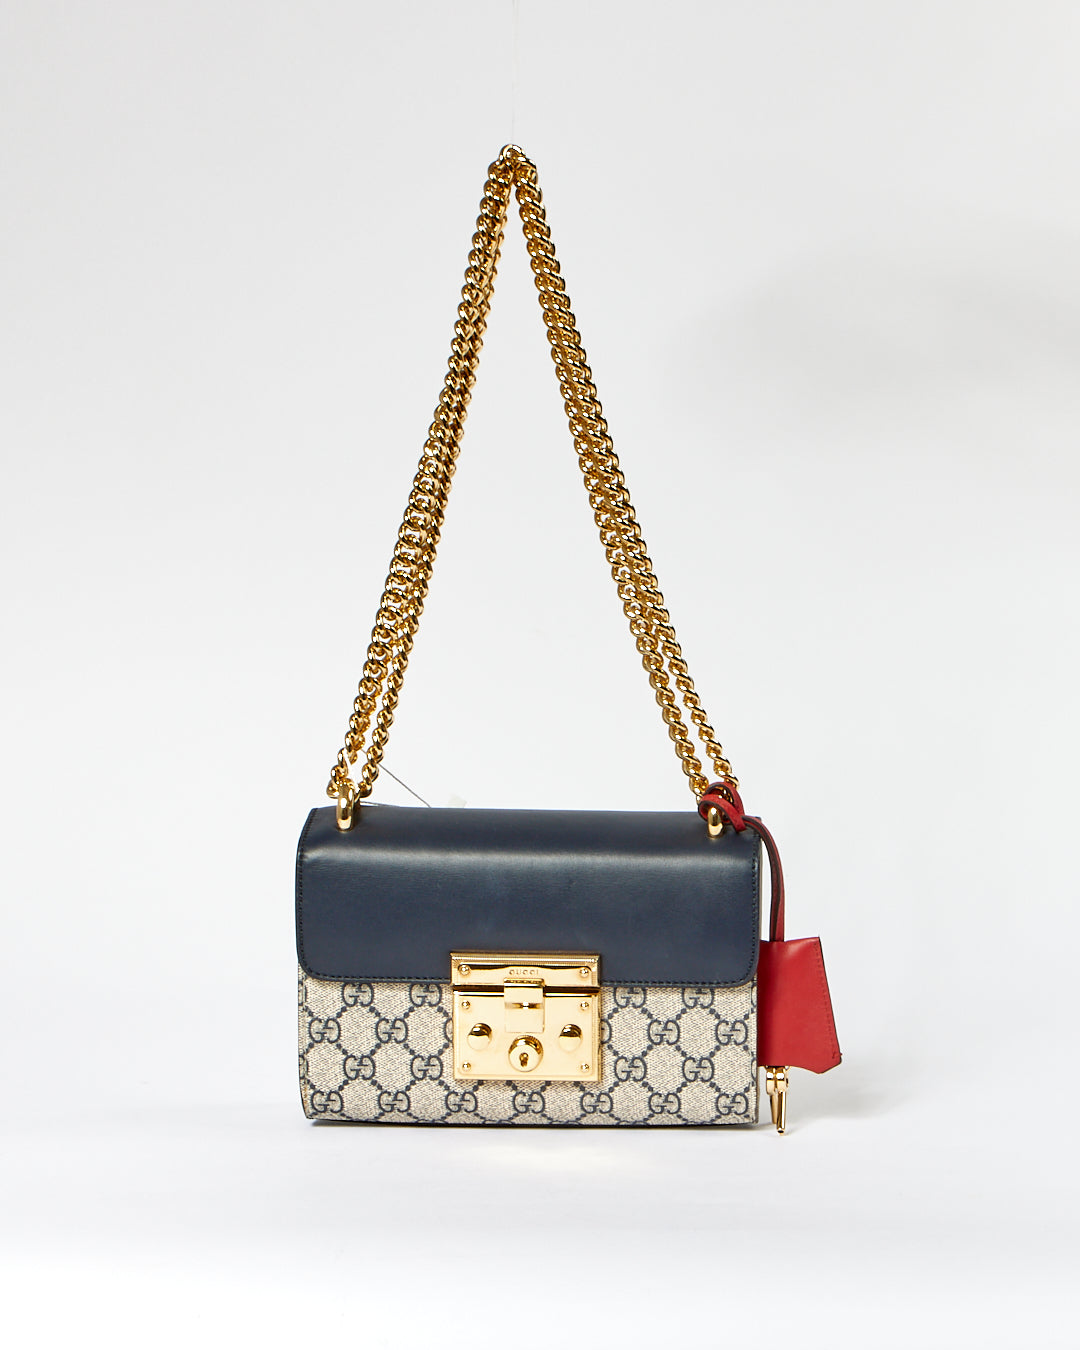 Petit sac cadenas en toile et cuir Gucci GG Supreme bleu marine/crème